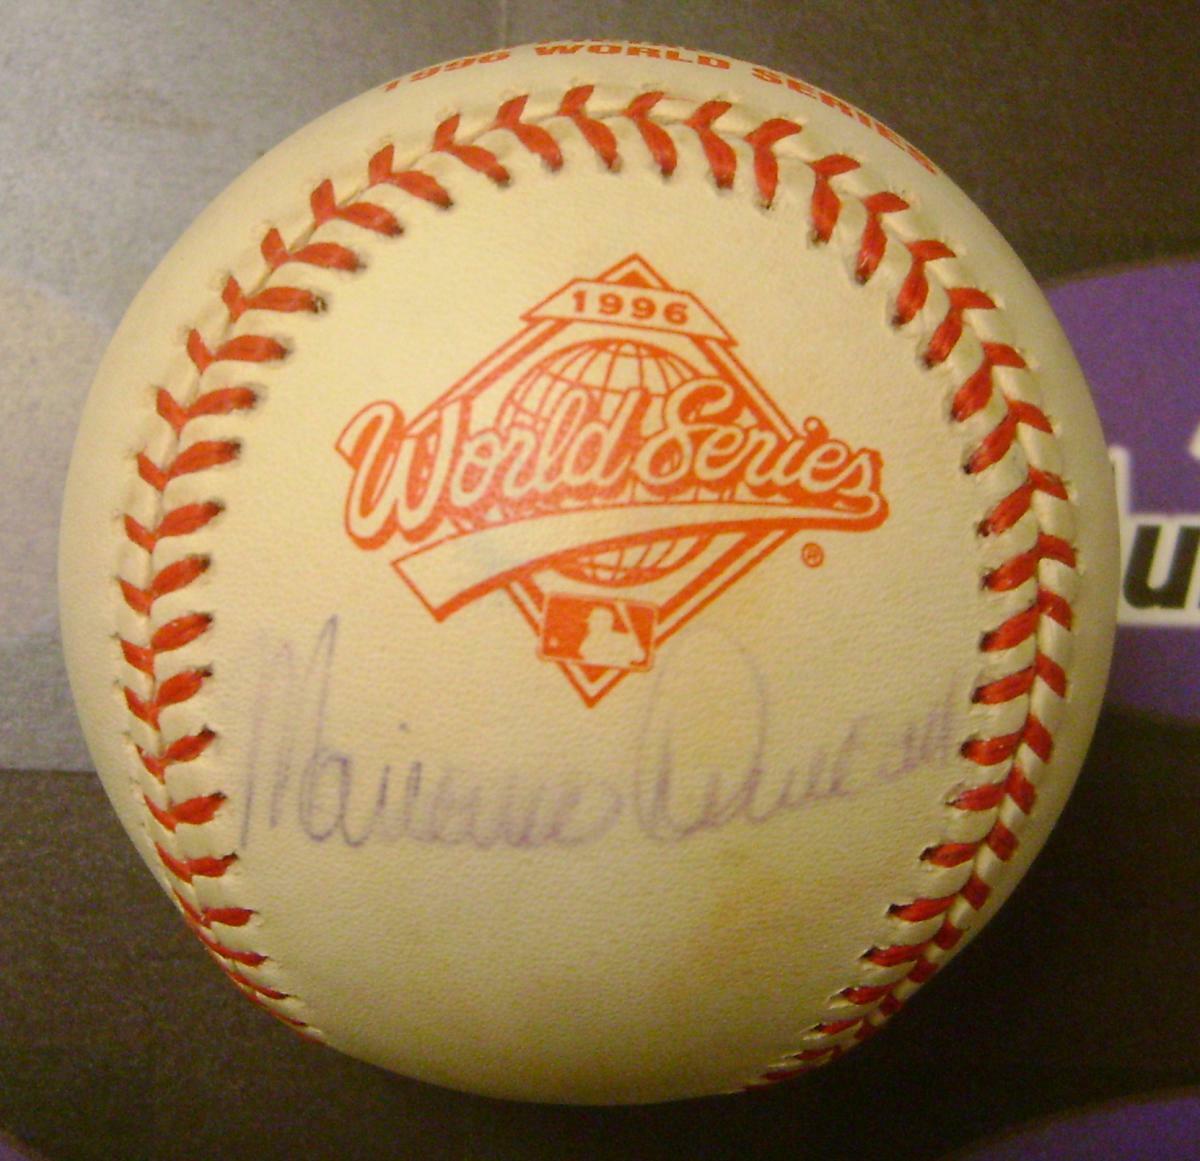 Mariano Duncan autographed 1996 World Series baseball Yellowed New York Yankees